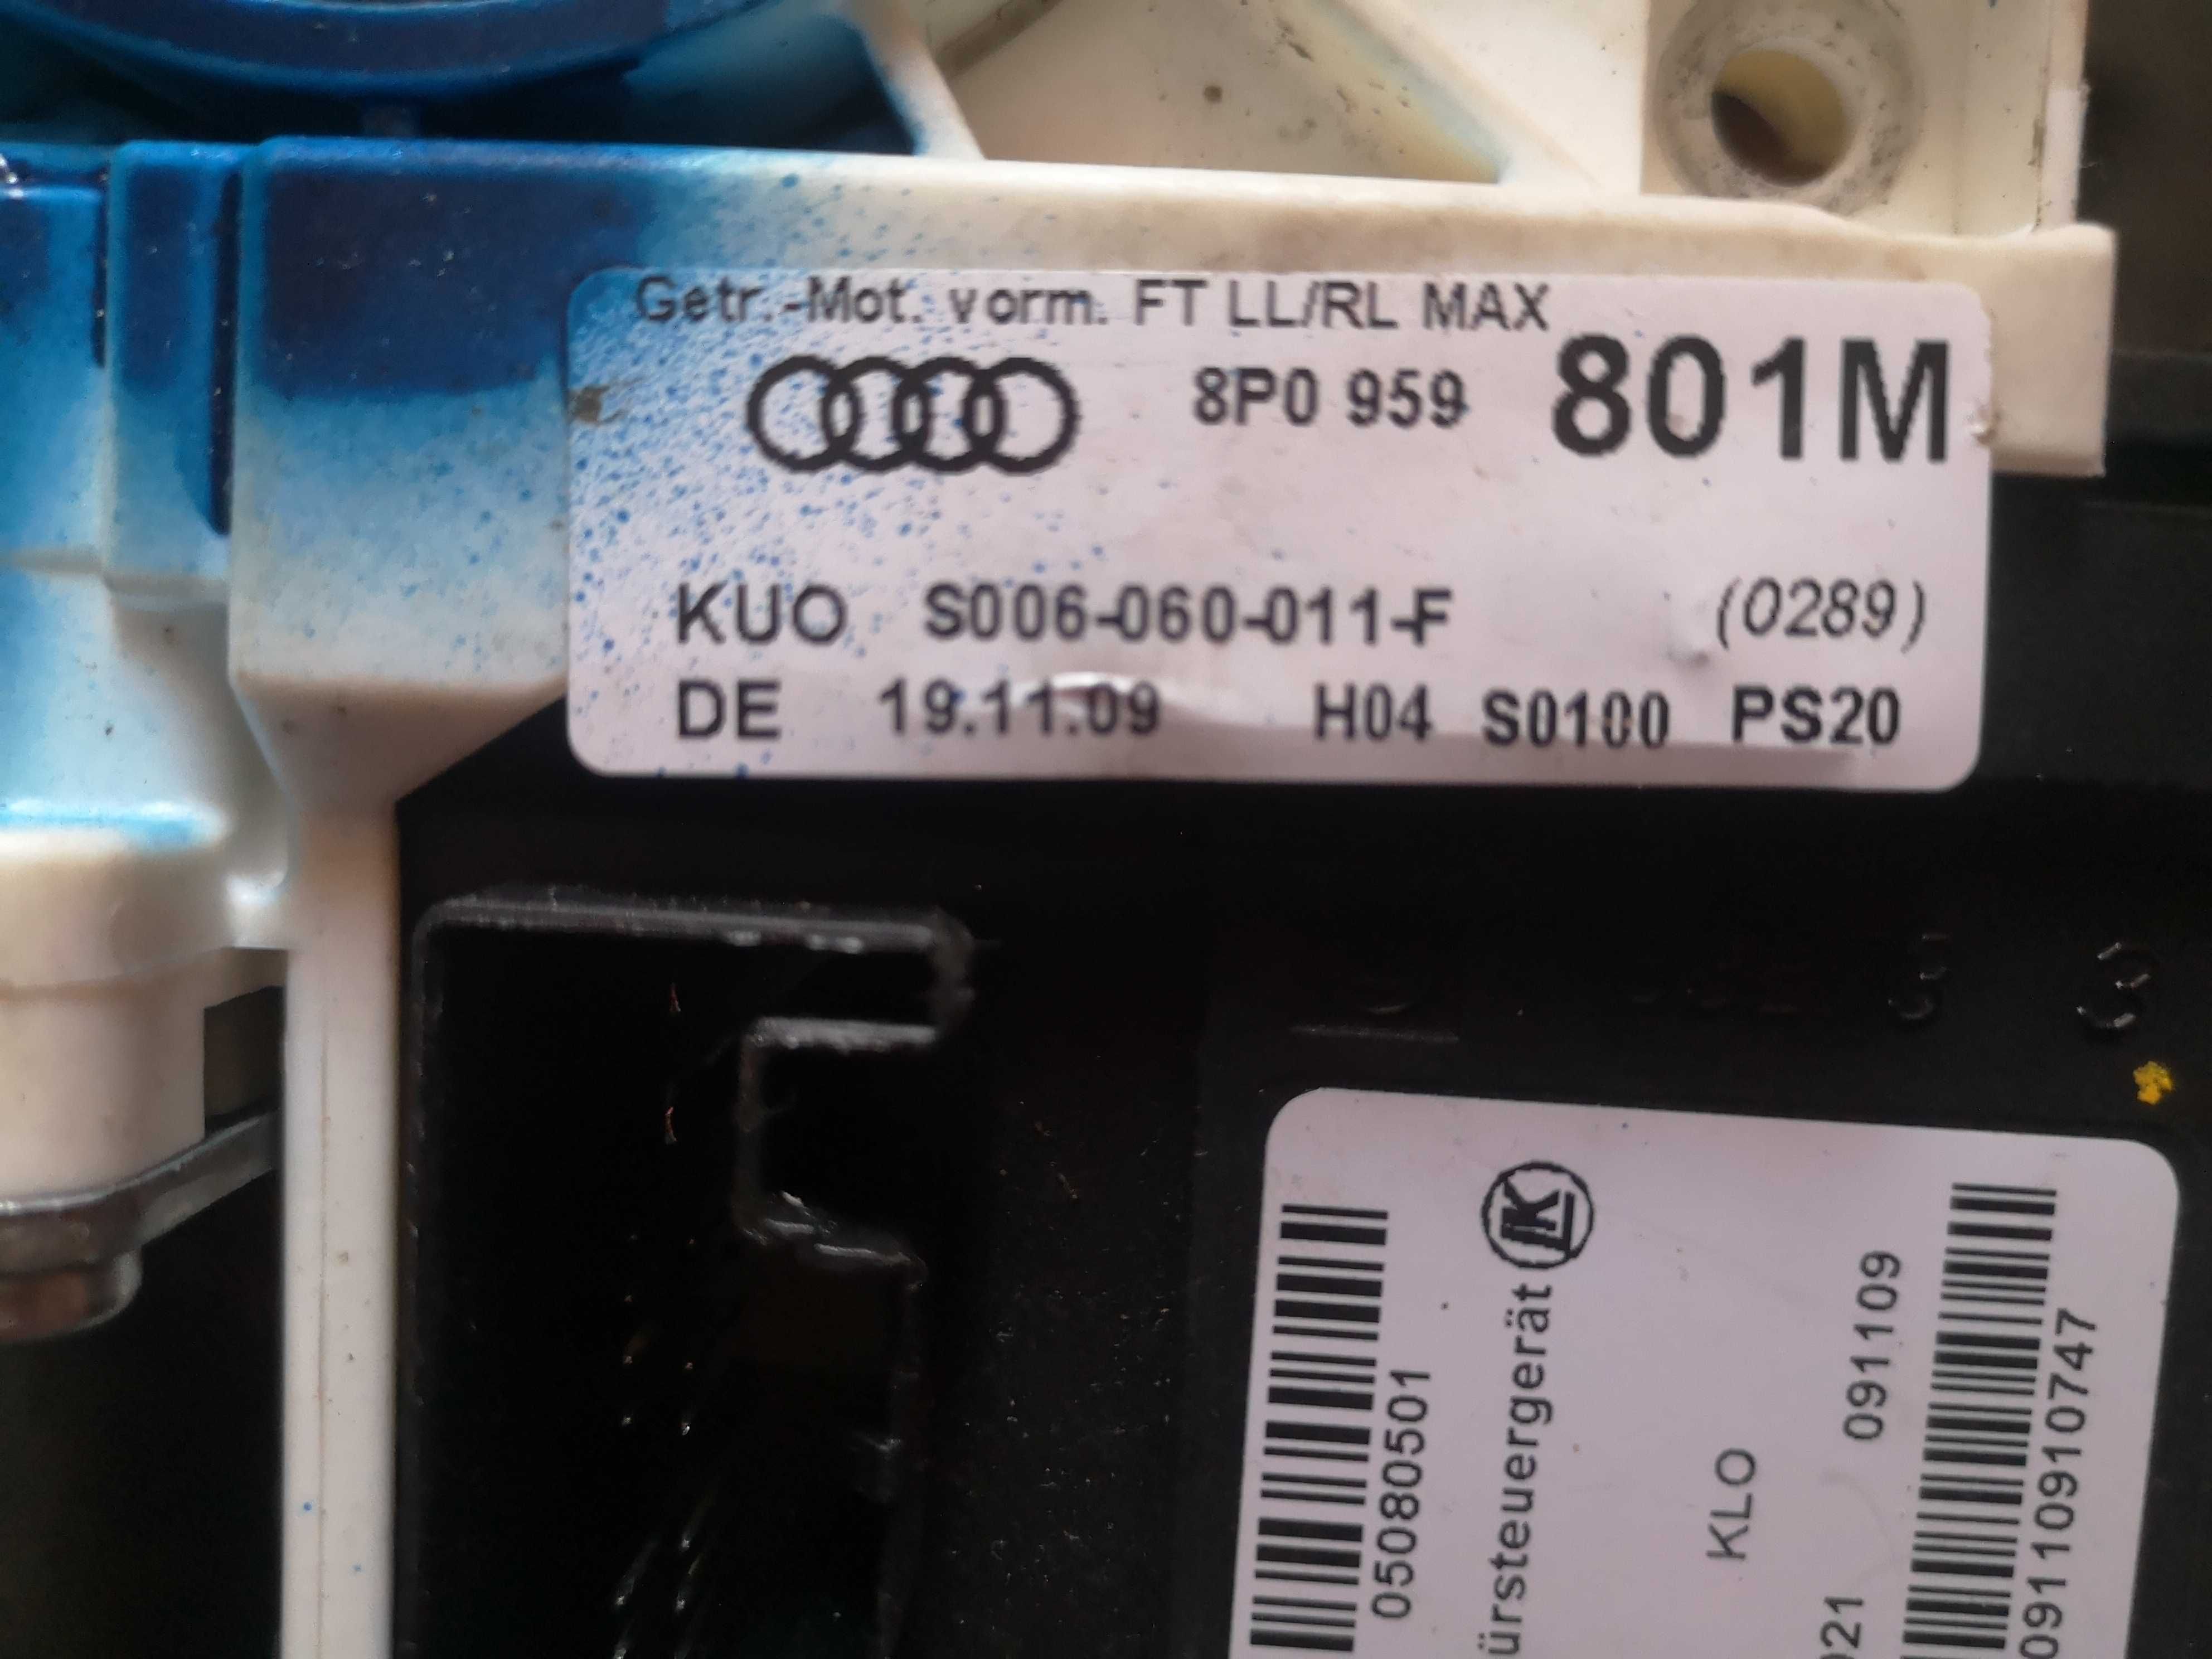 Motor geam Audi A3 OEM 8P0 959 801 M